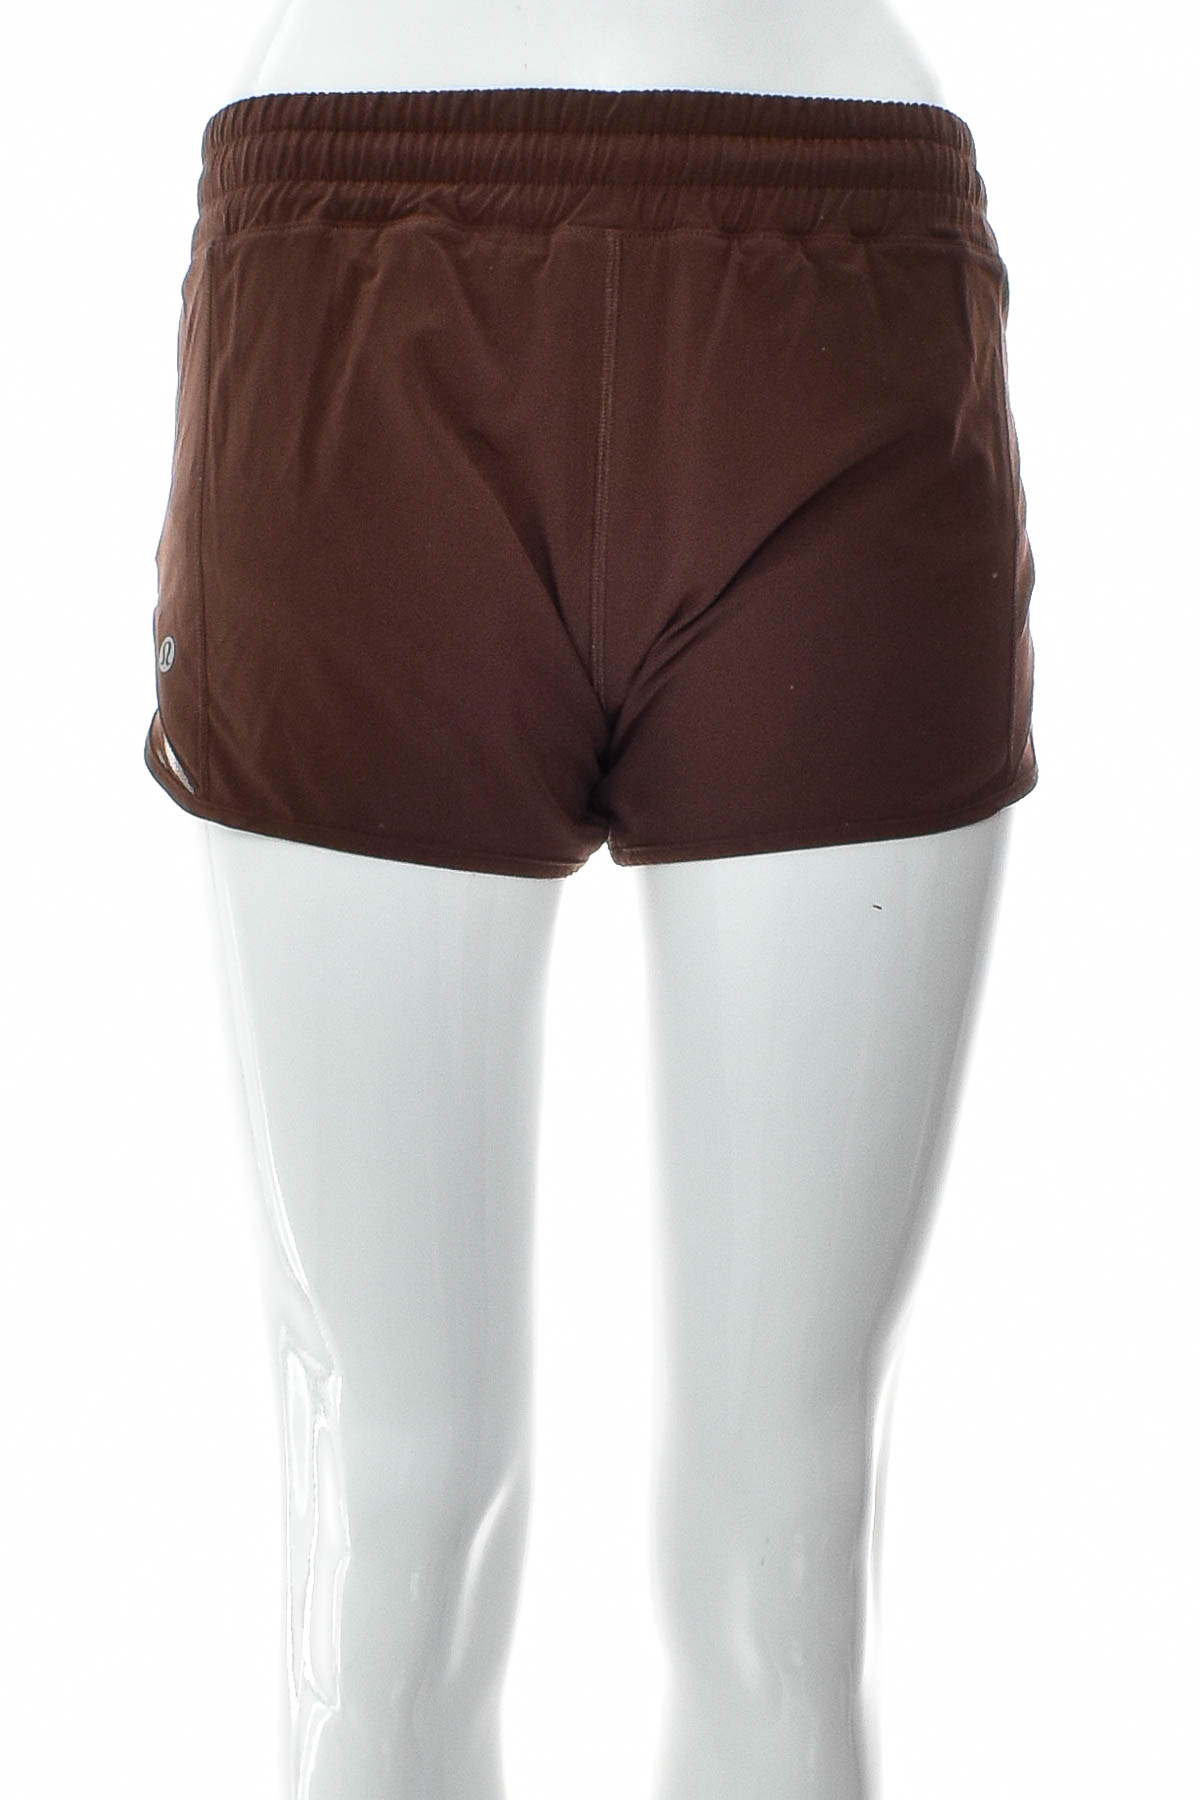 Women's shorts - lululemon - 0